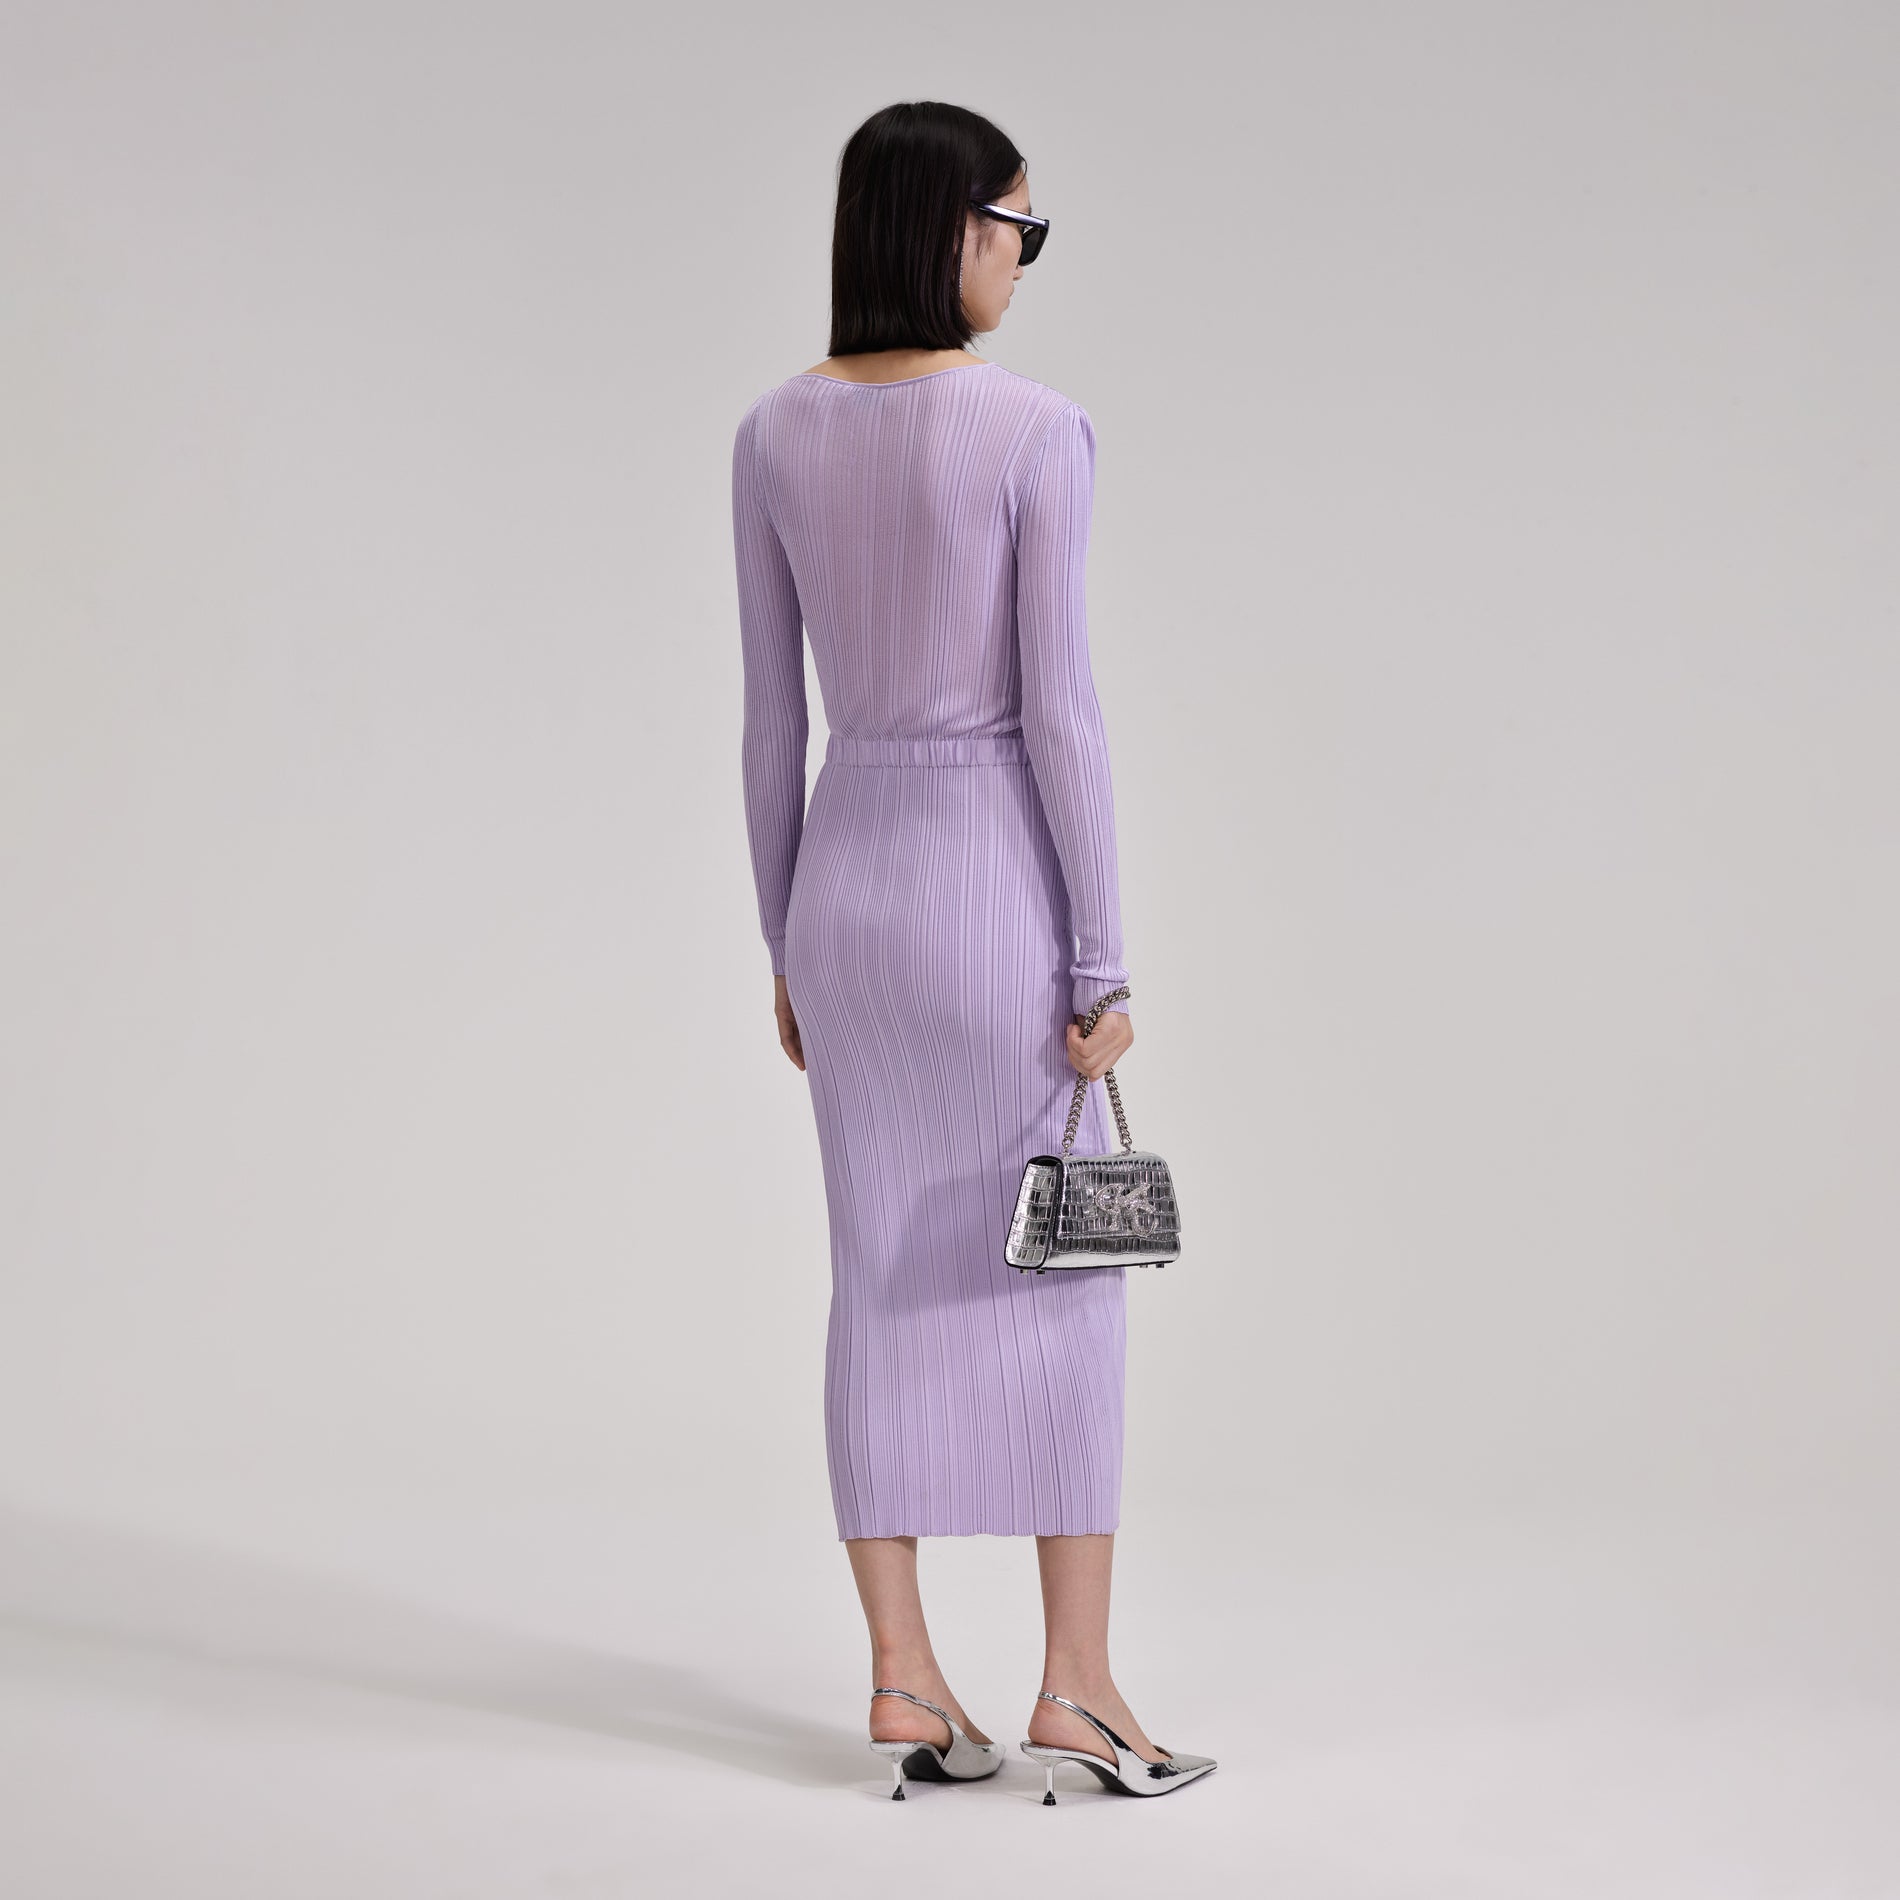 A woman wearing the Lilac Knit Midi Dress